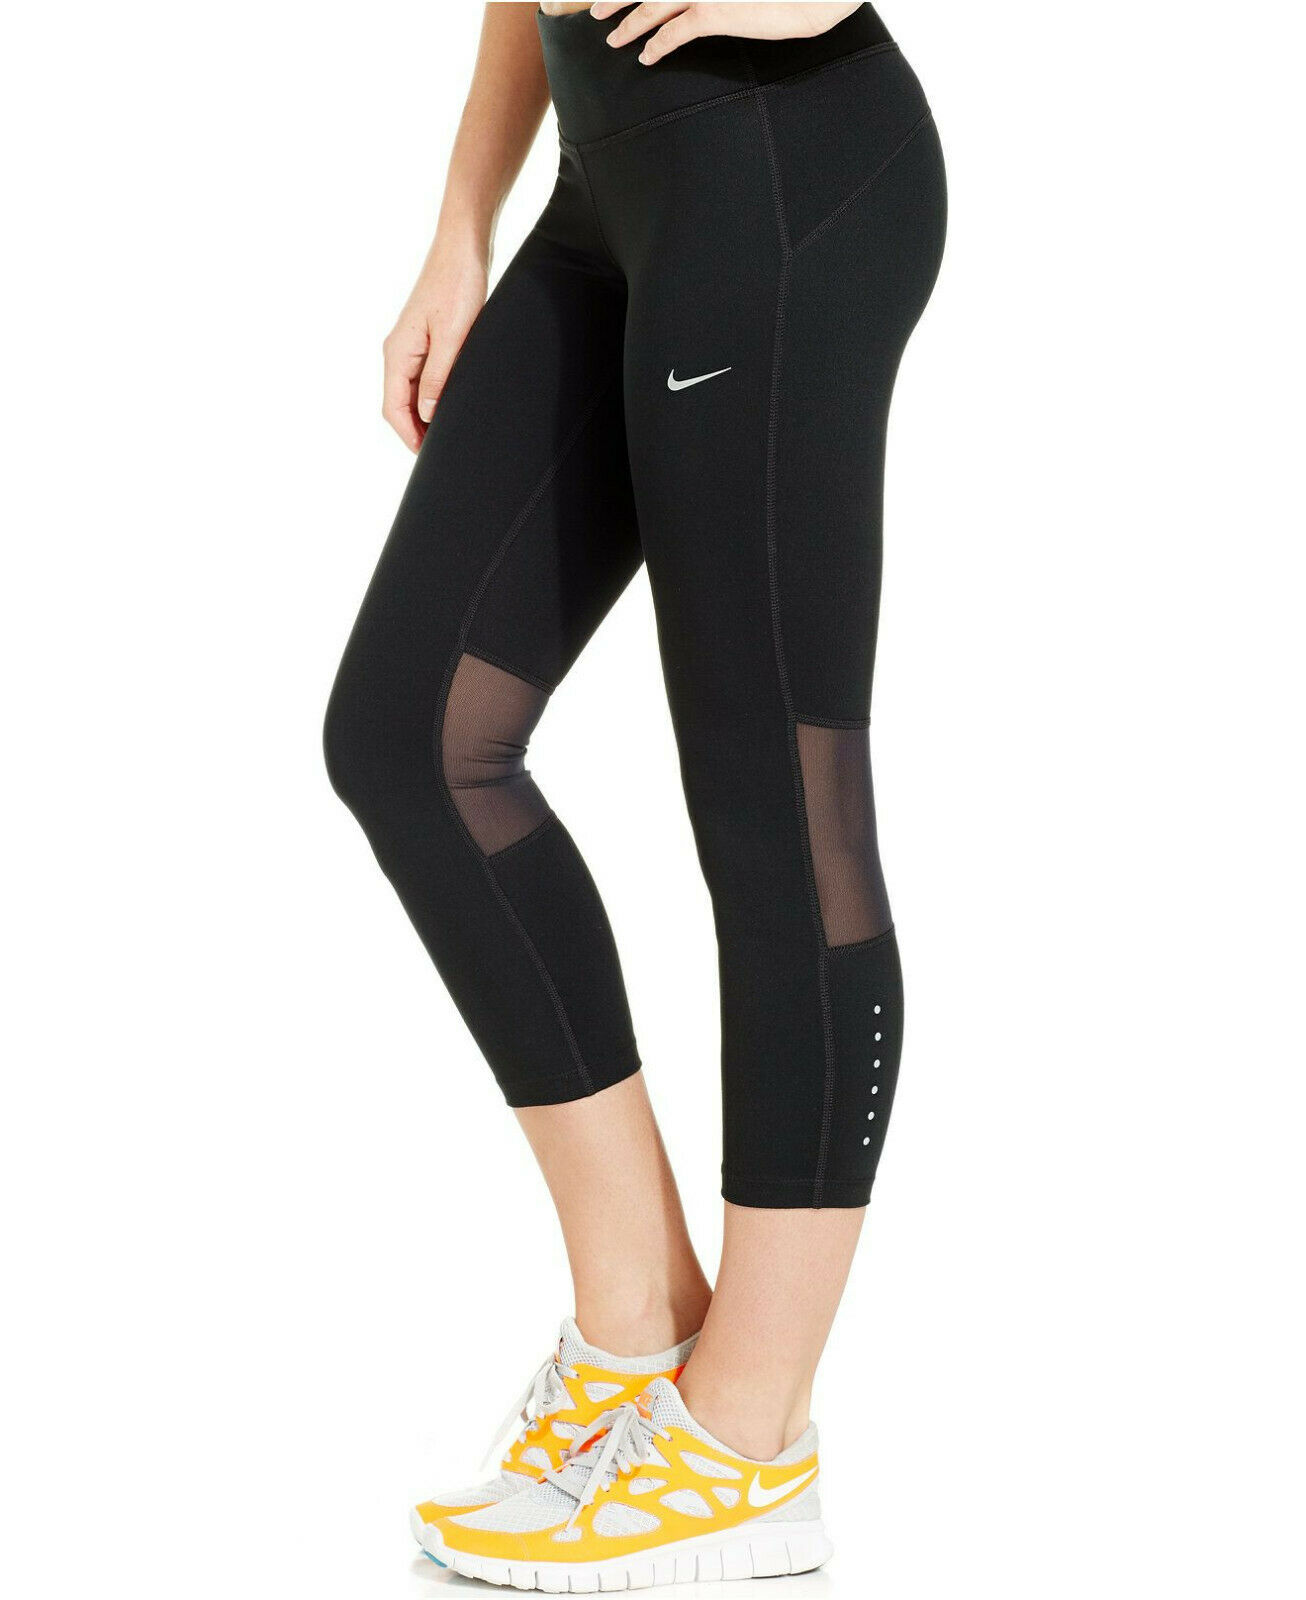 Nike Dry Fit Run тайтсы женские